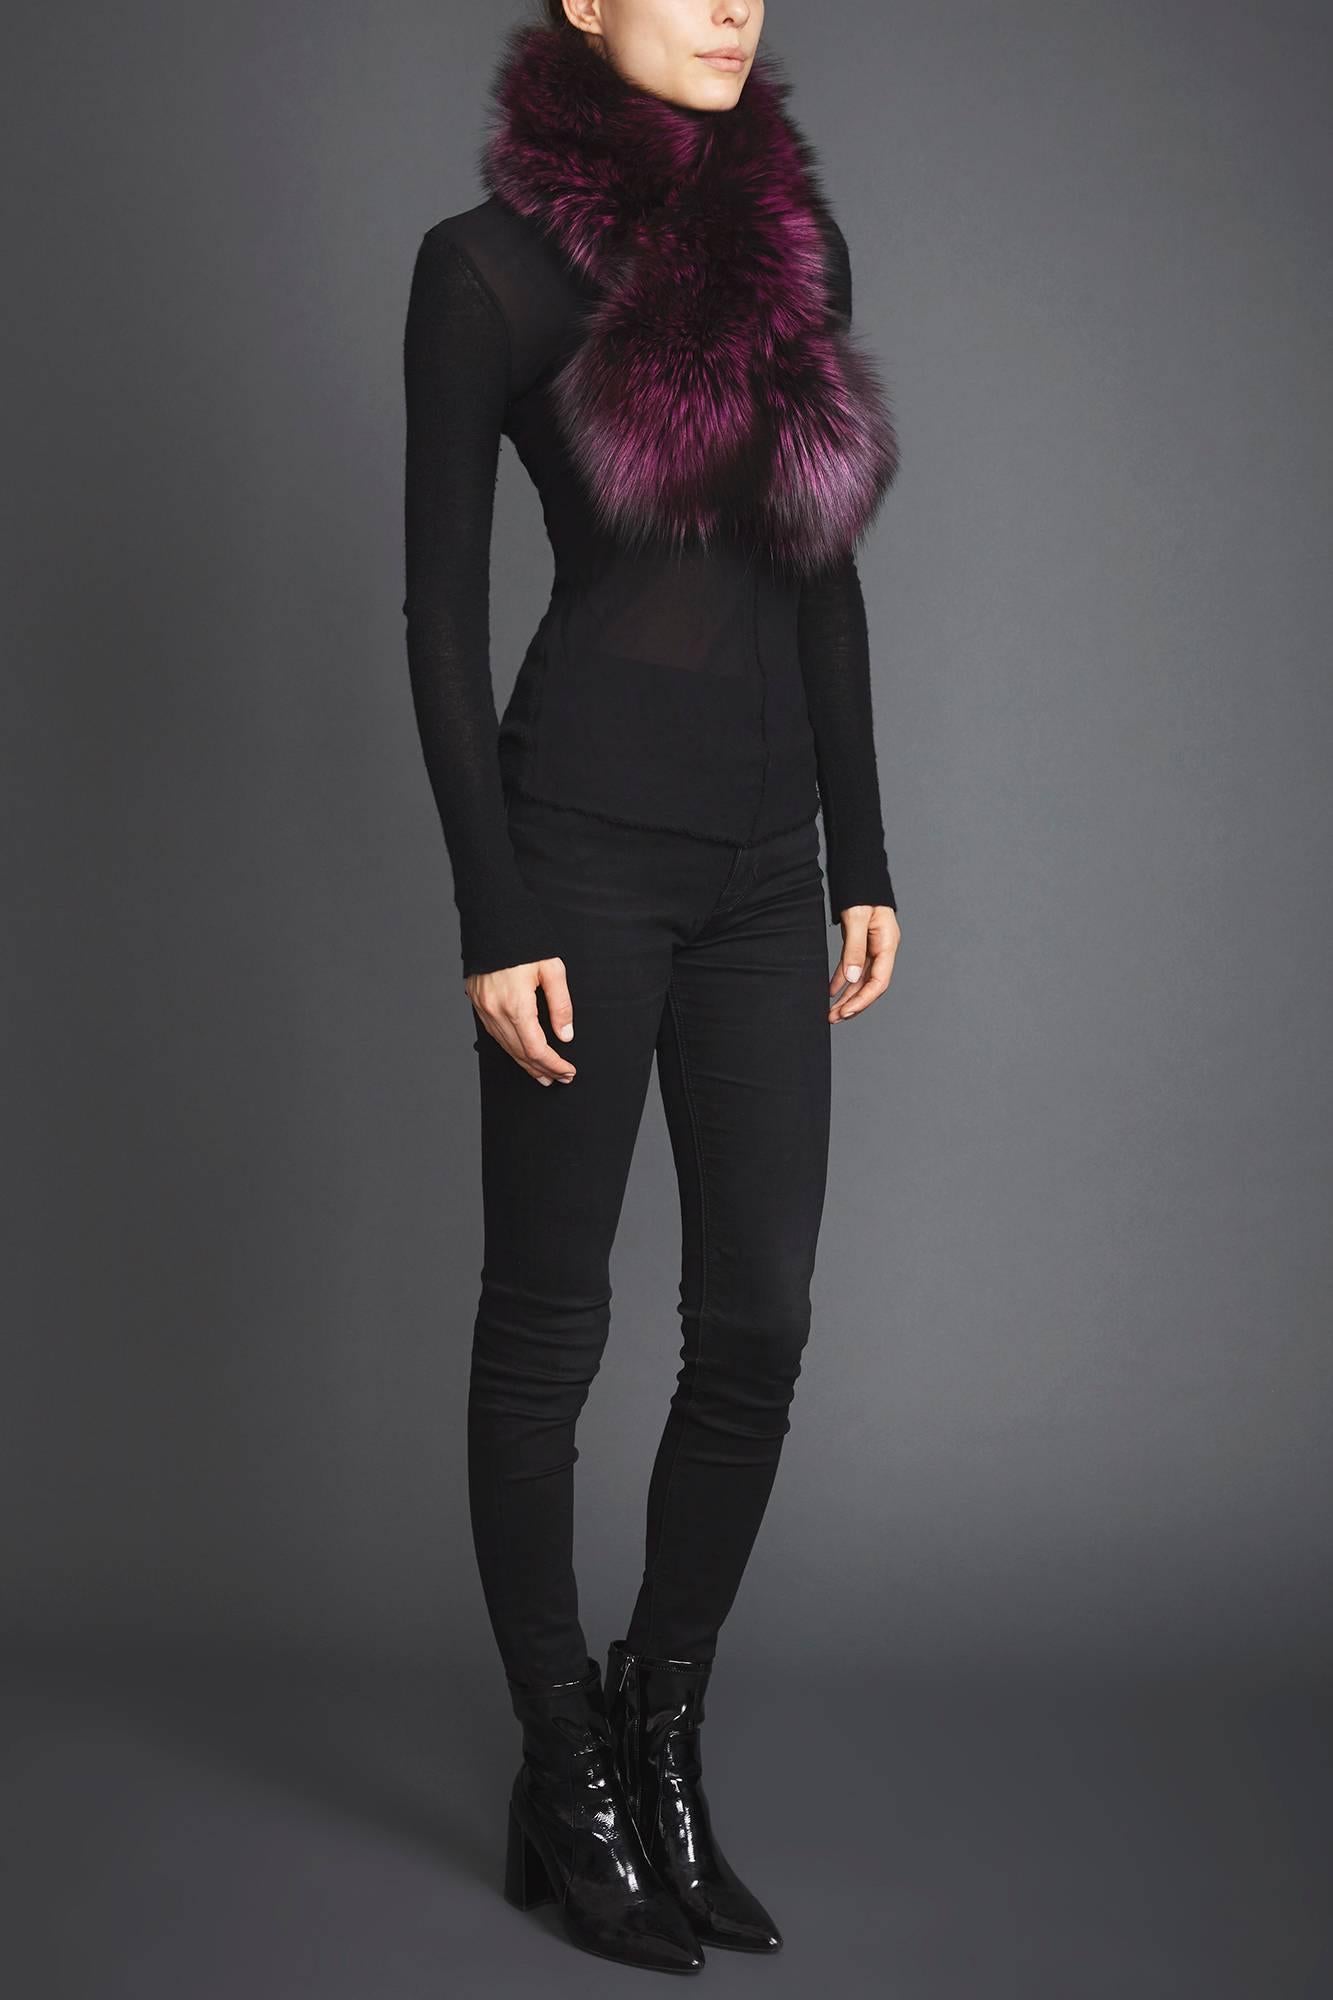 Black Verheyen London Lapel Cross-through Collar Stole in Purple Fox Fur - Gift